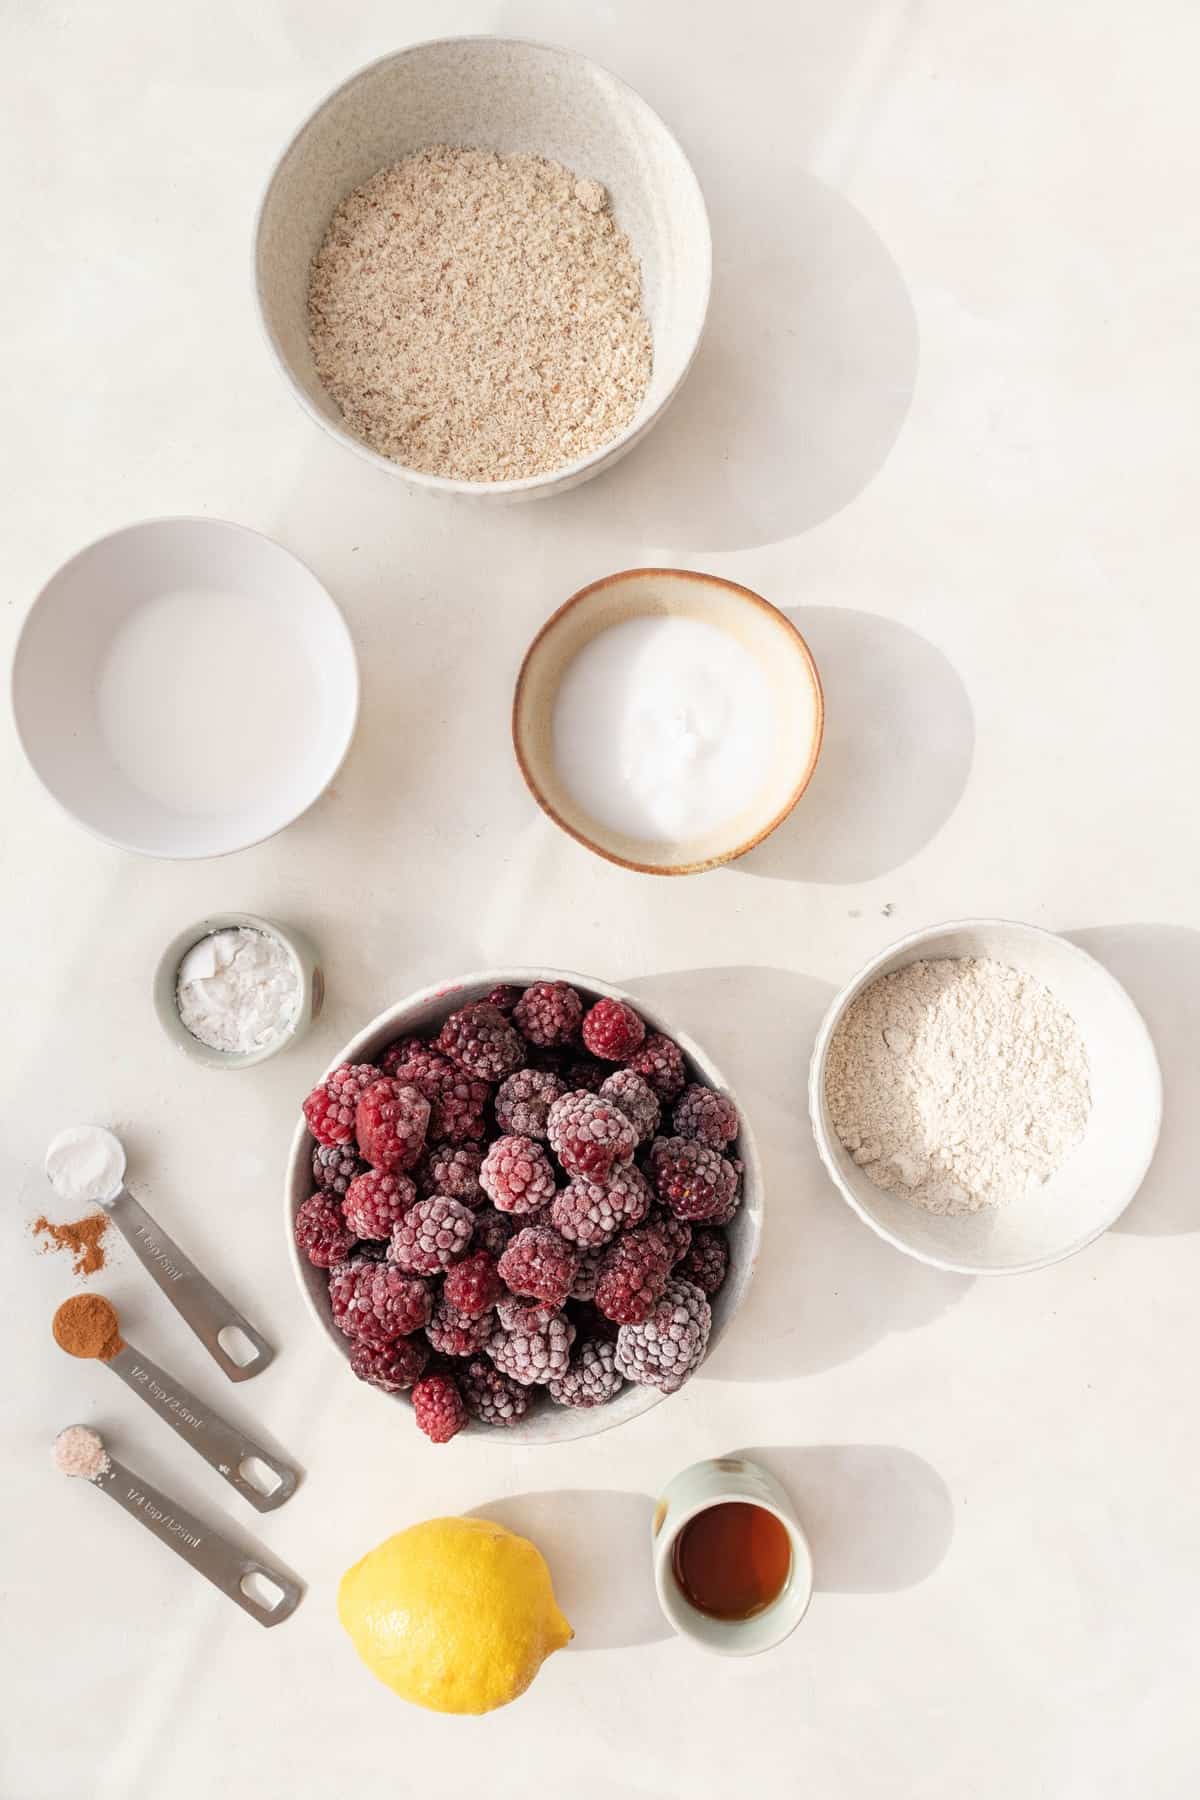 Gluten-free blackberry cobbler ingredients